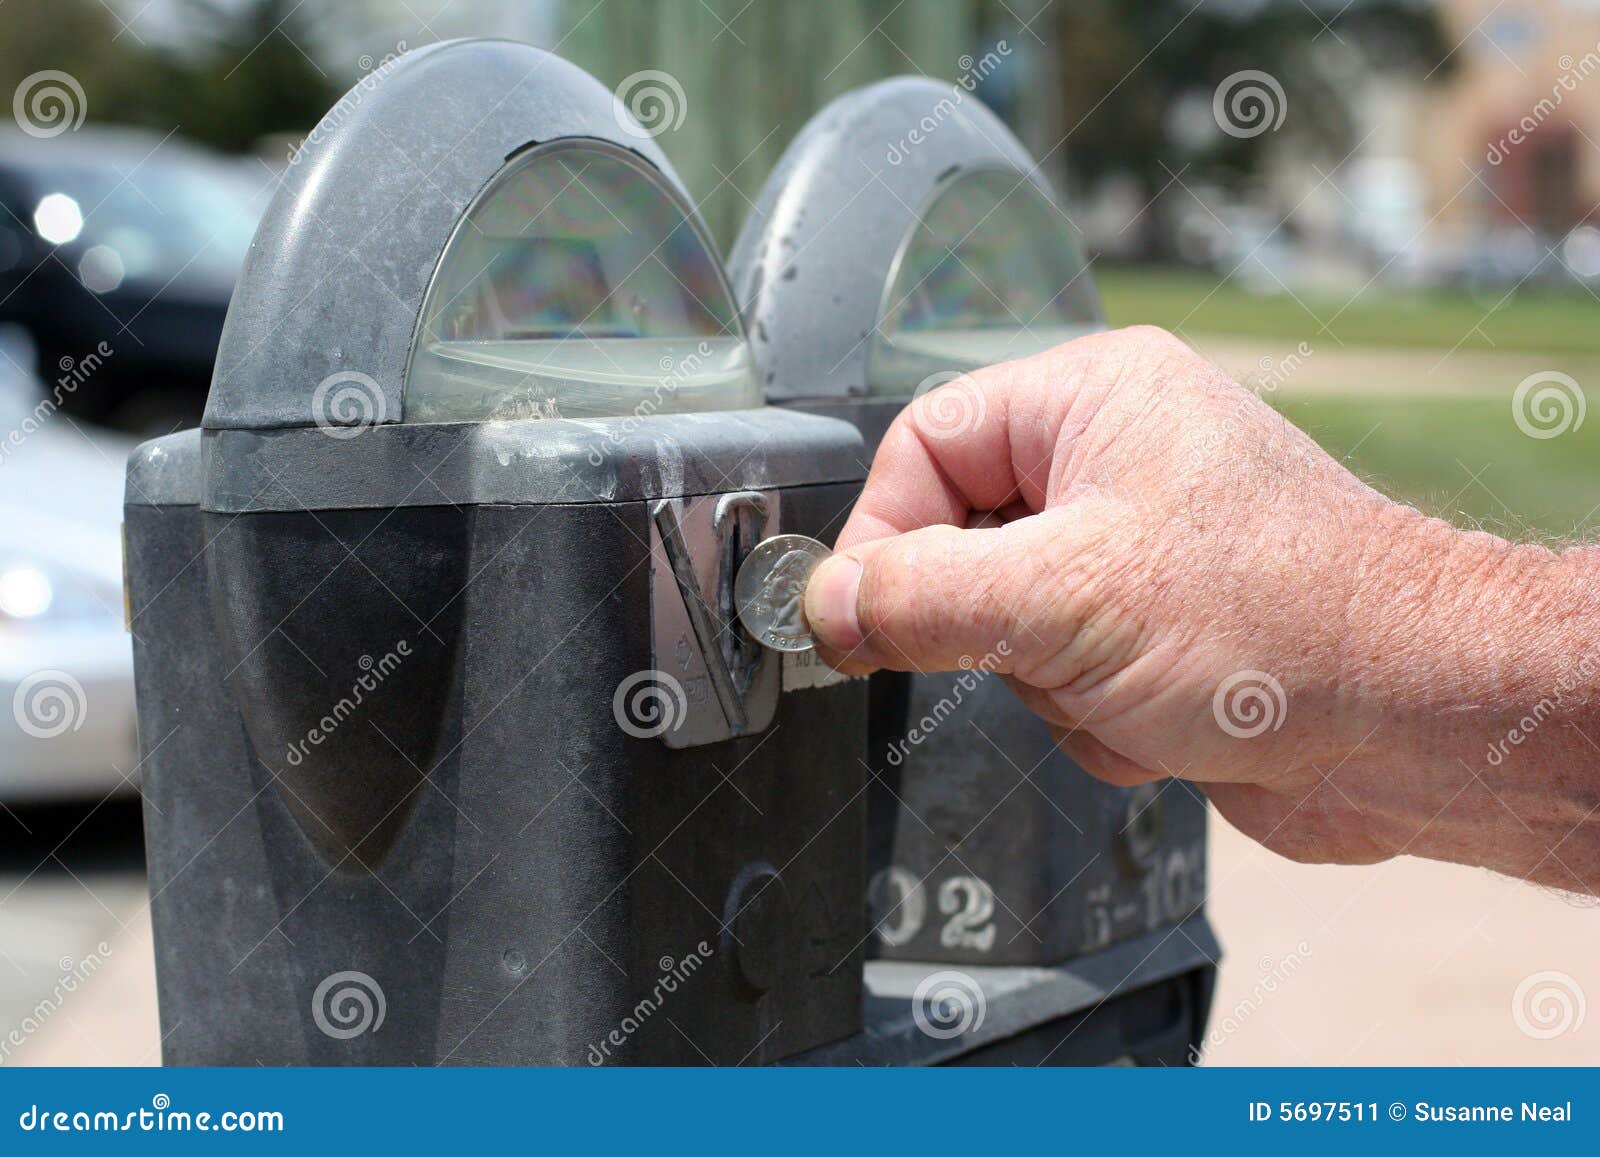 paying the parking meter